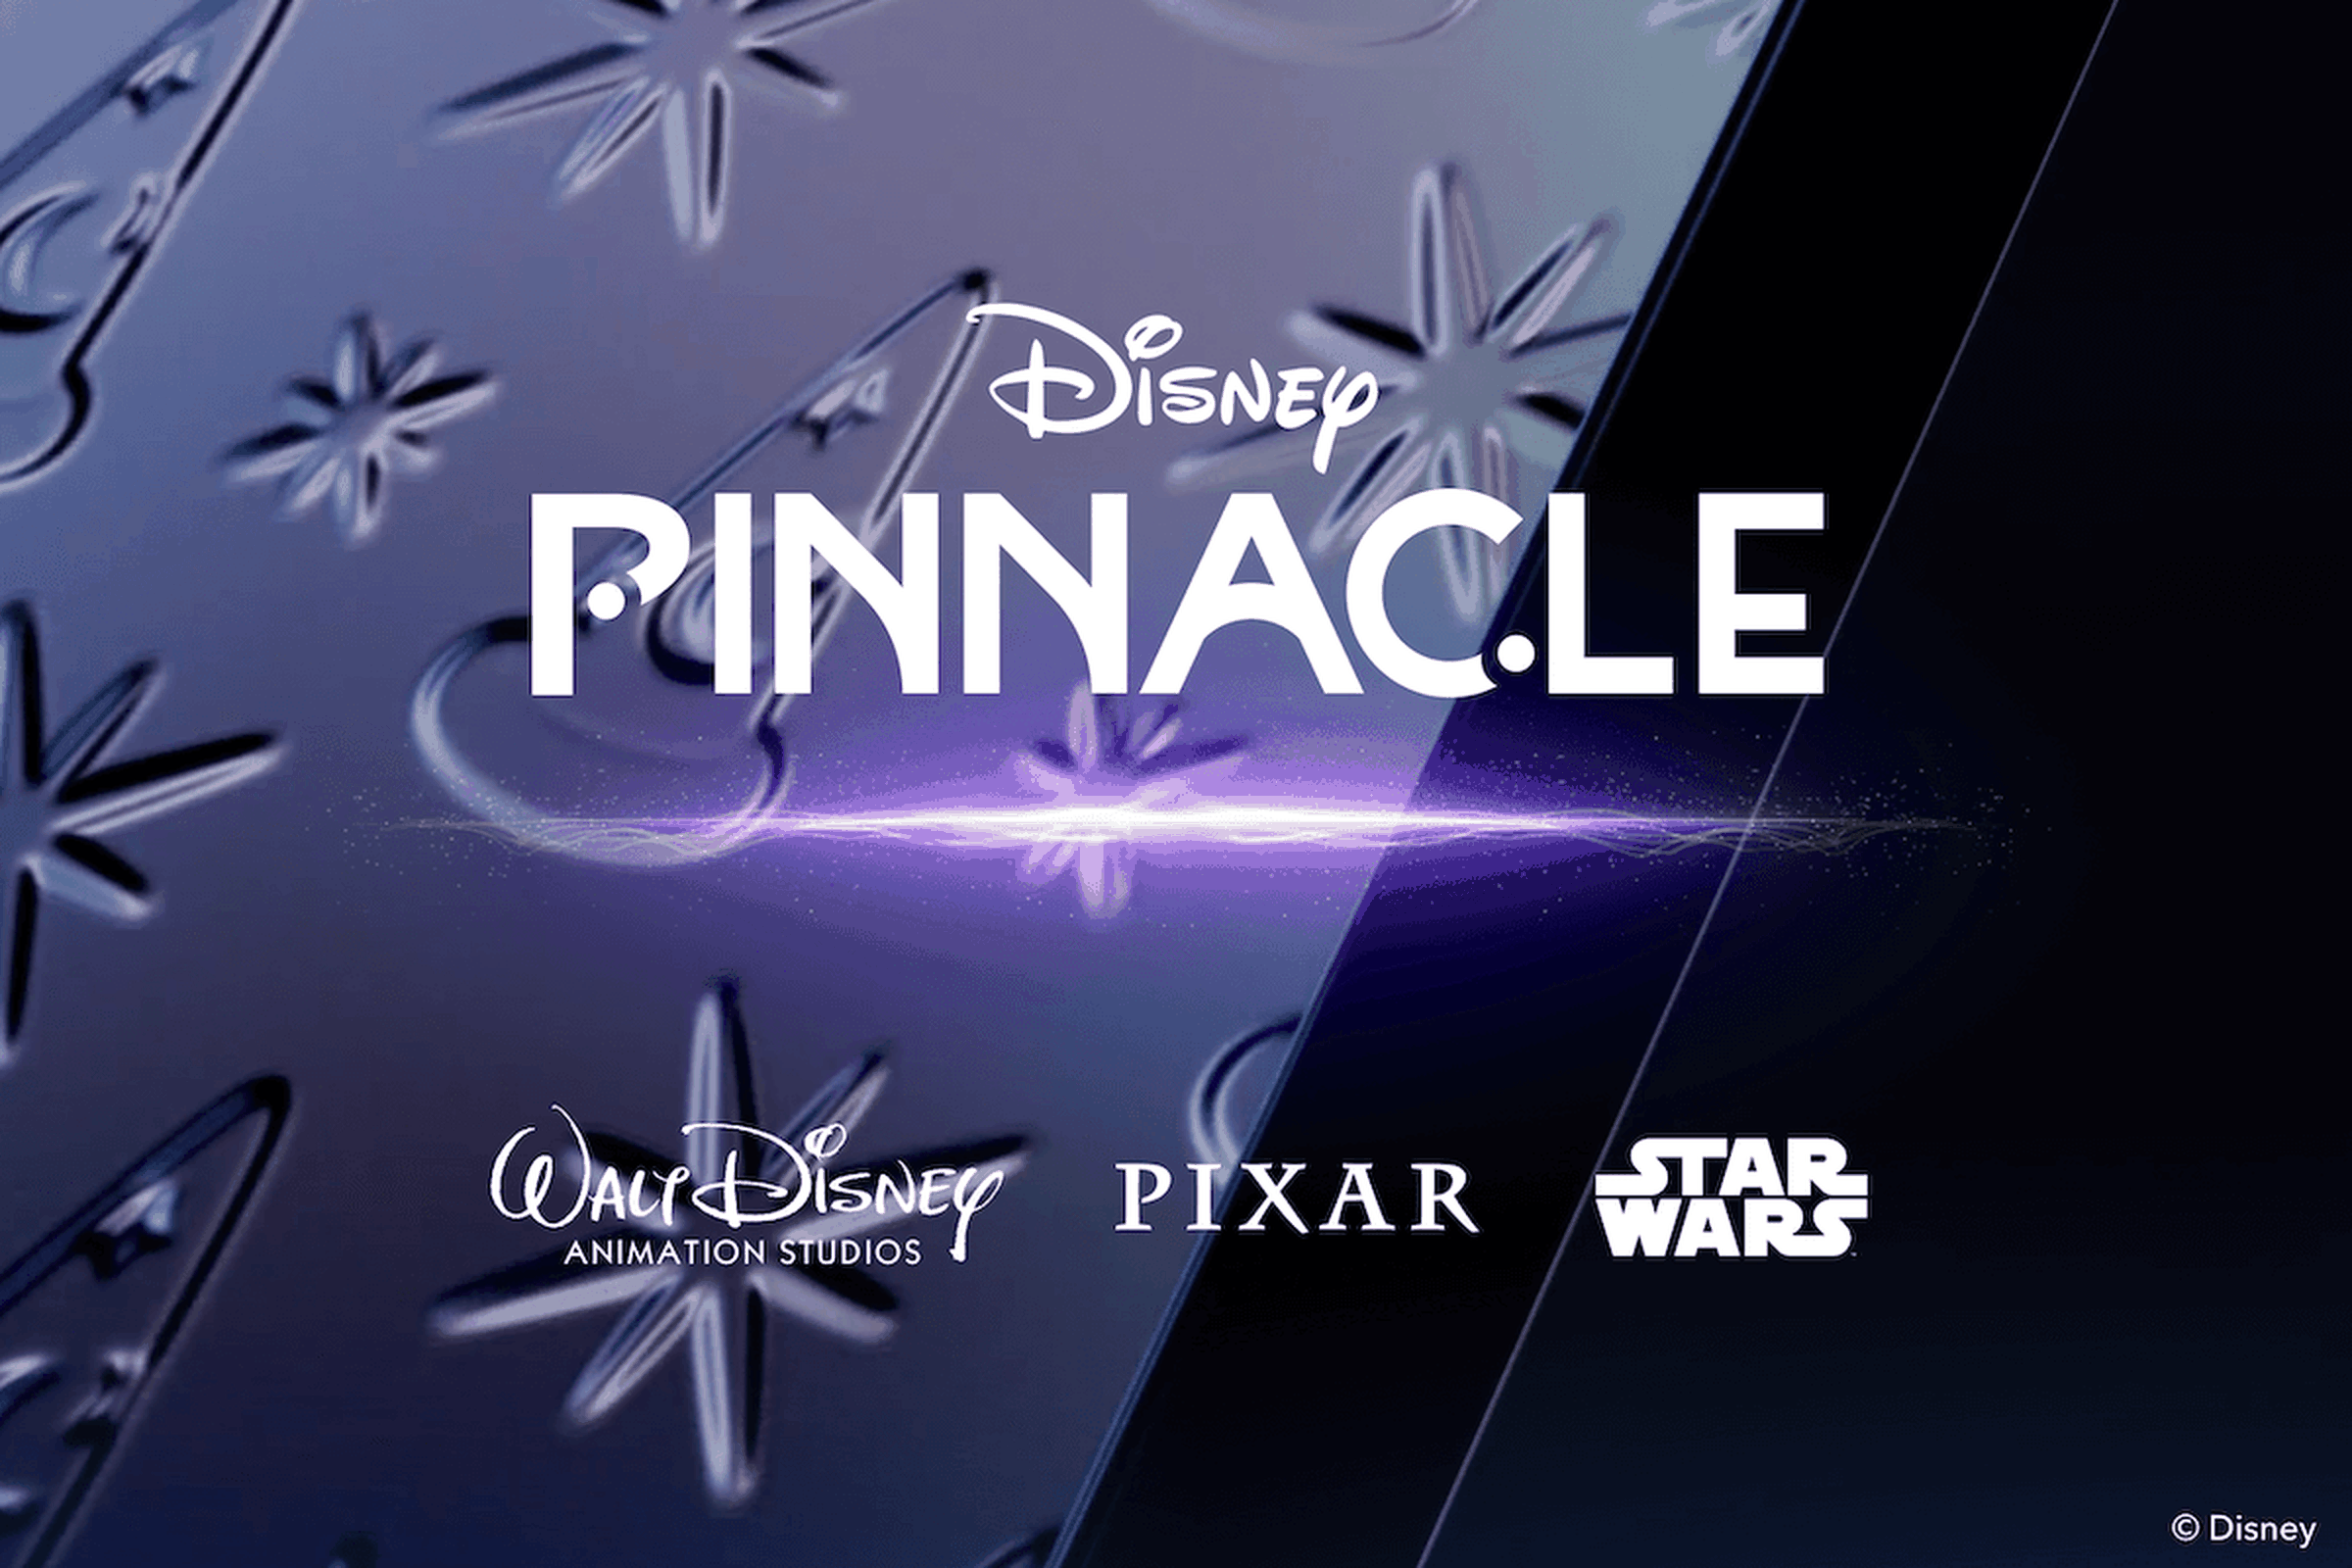 The words “Disney Pinnacle” displayed above logos for Walt Disney Animation Studios, Pixar, and Star Wars.